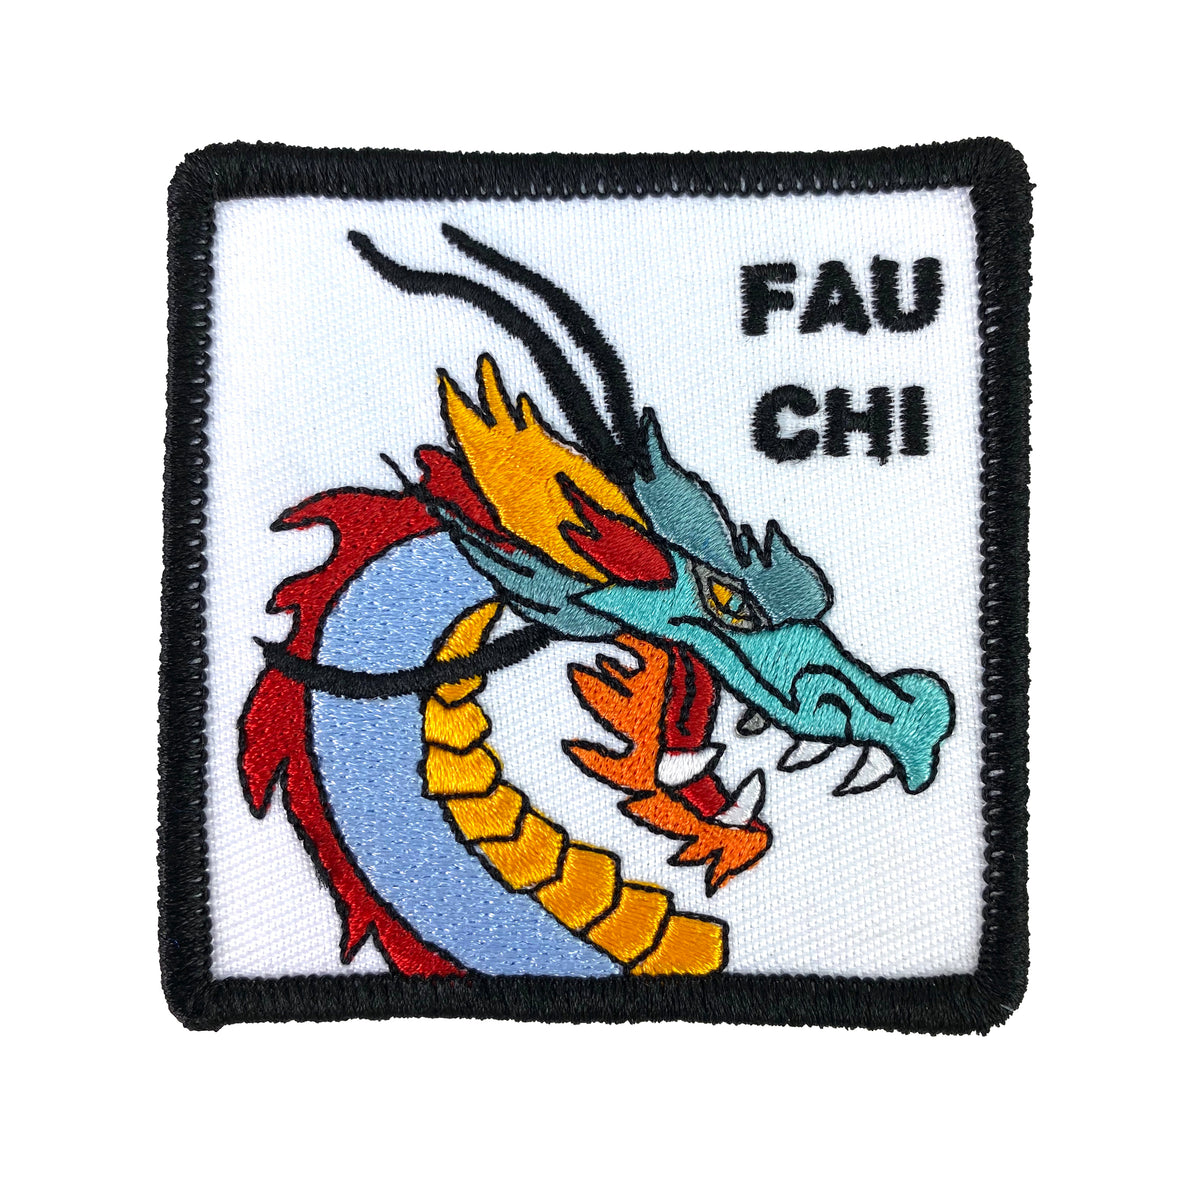 FAU CHI